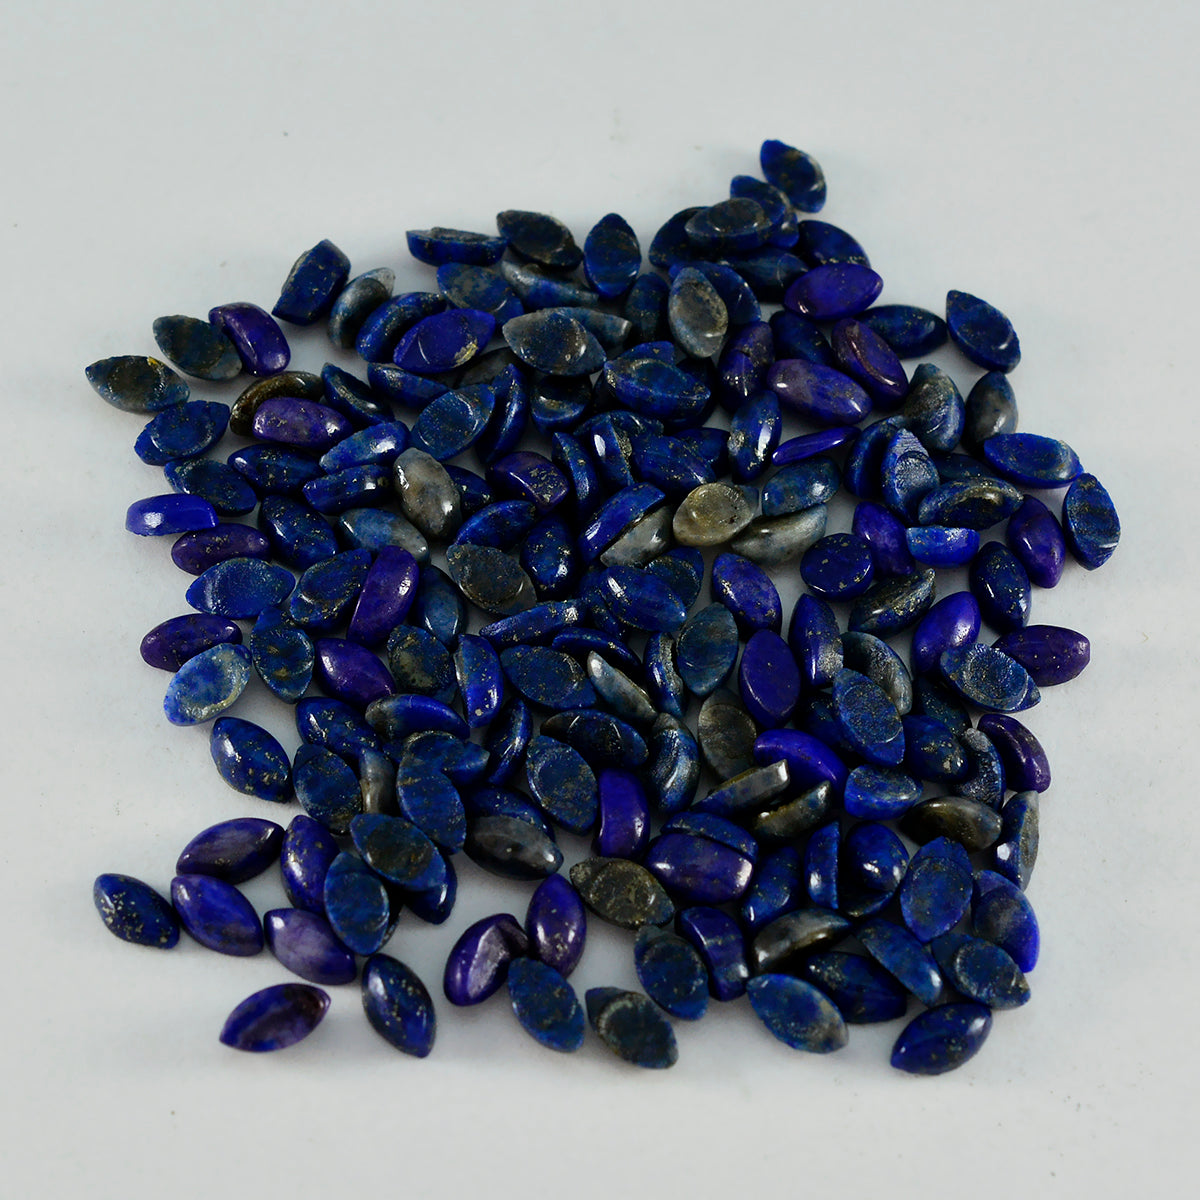 Riyogems 1PC Blue Lapis Lazuli Cabochon 3x6 mm Marquise Shape good-looking Quality Loose Gemstone